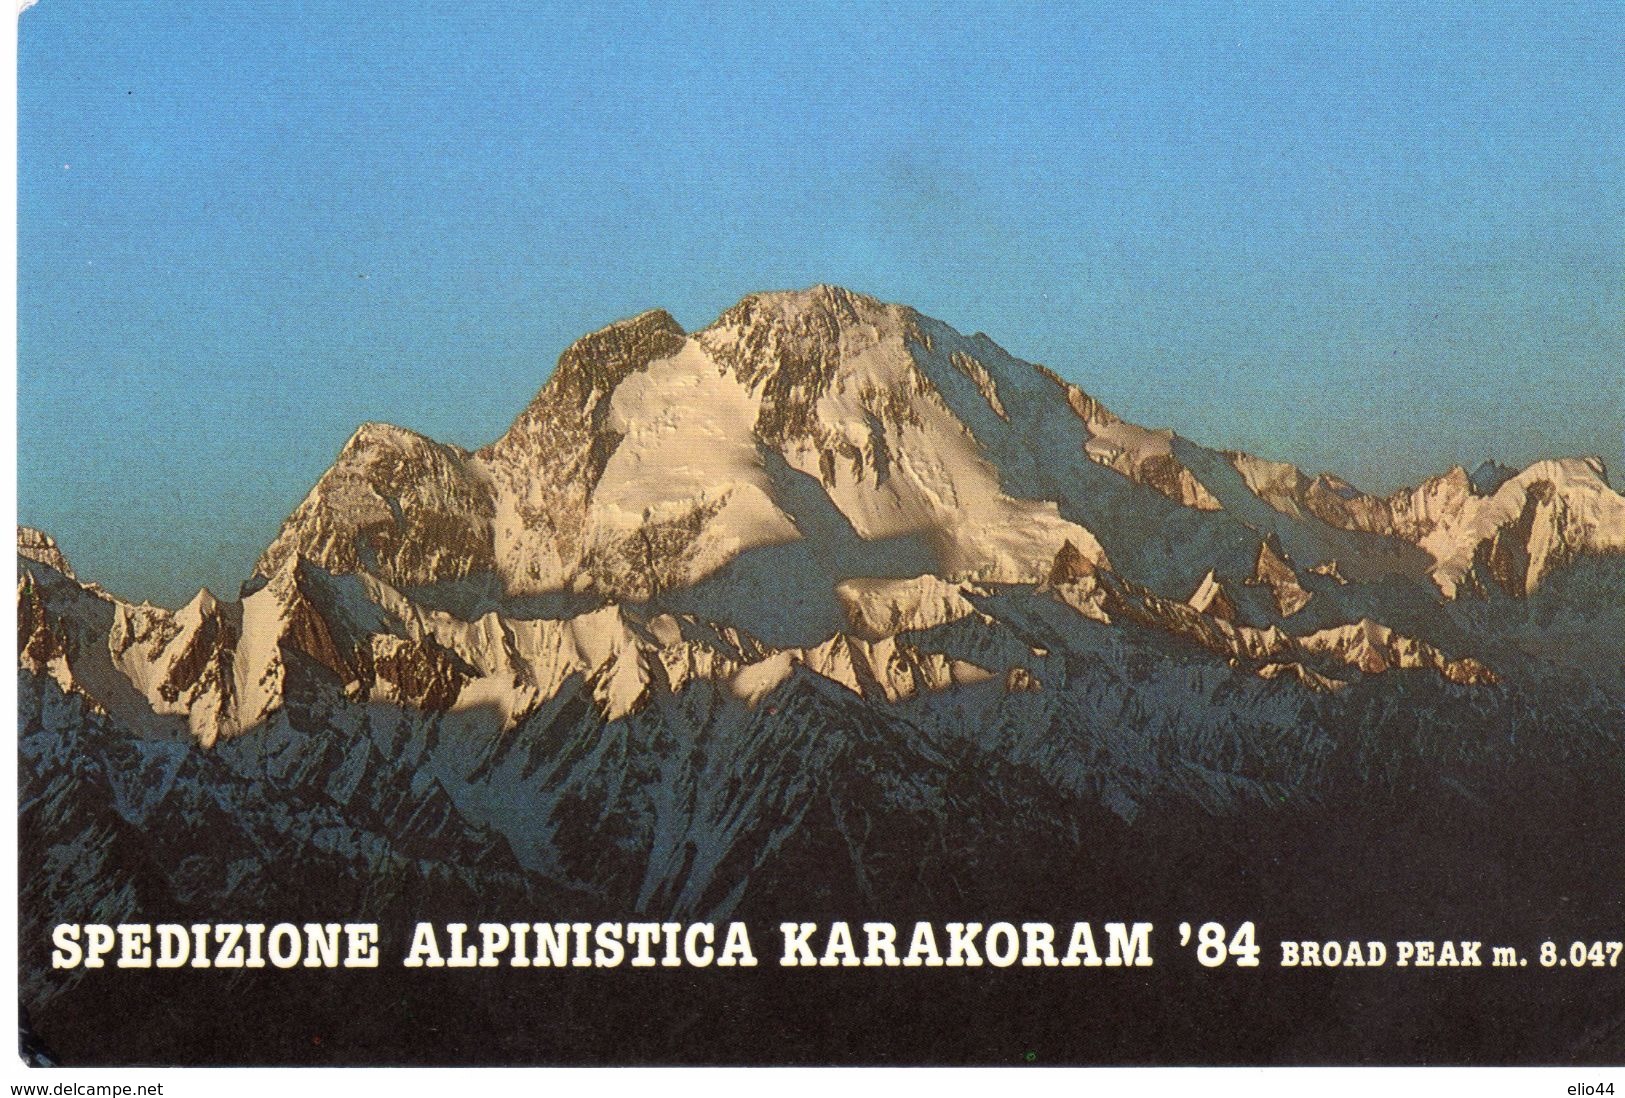 Spedizione Alpinistica KARAKORAM  1984 - Broad Peak M. 8.047 - - Alpinismo